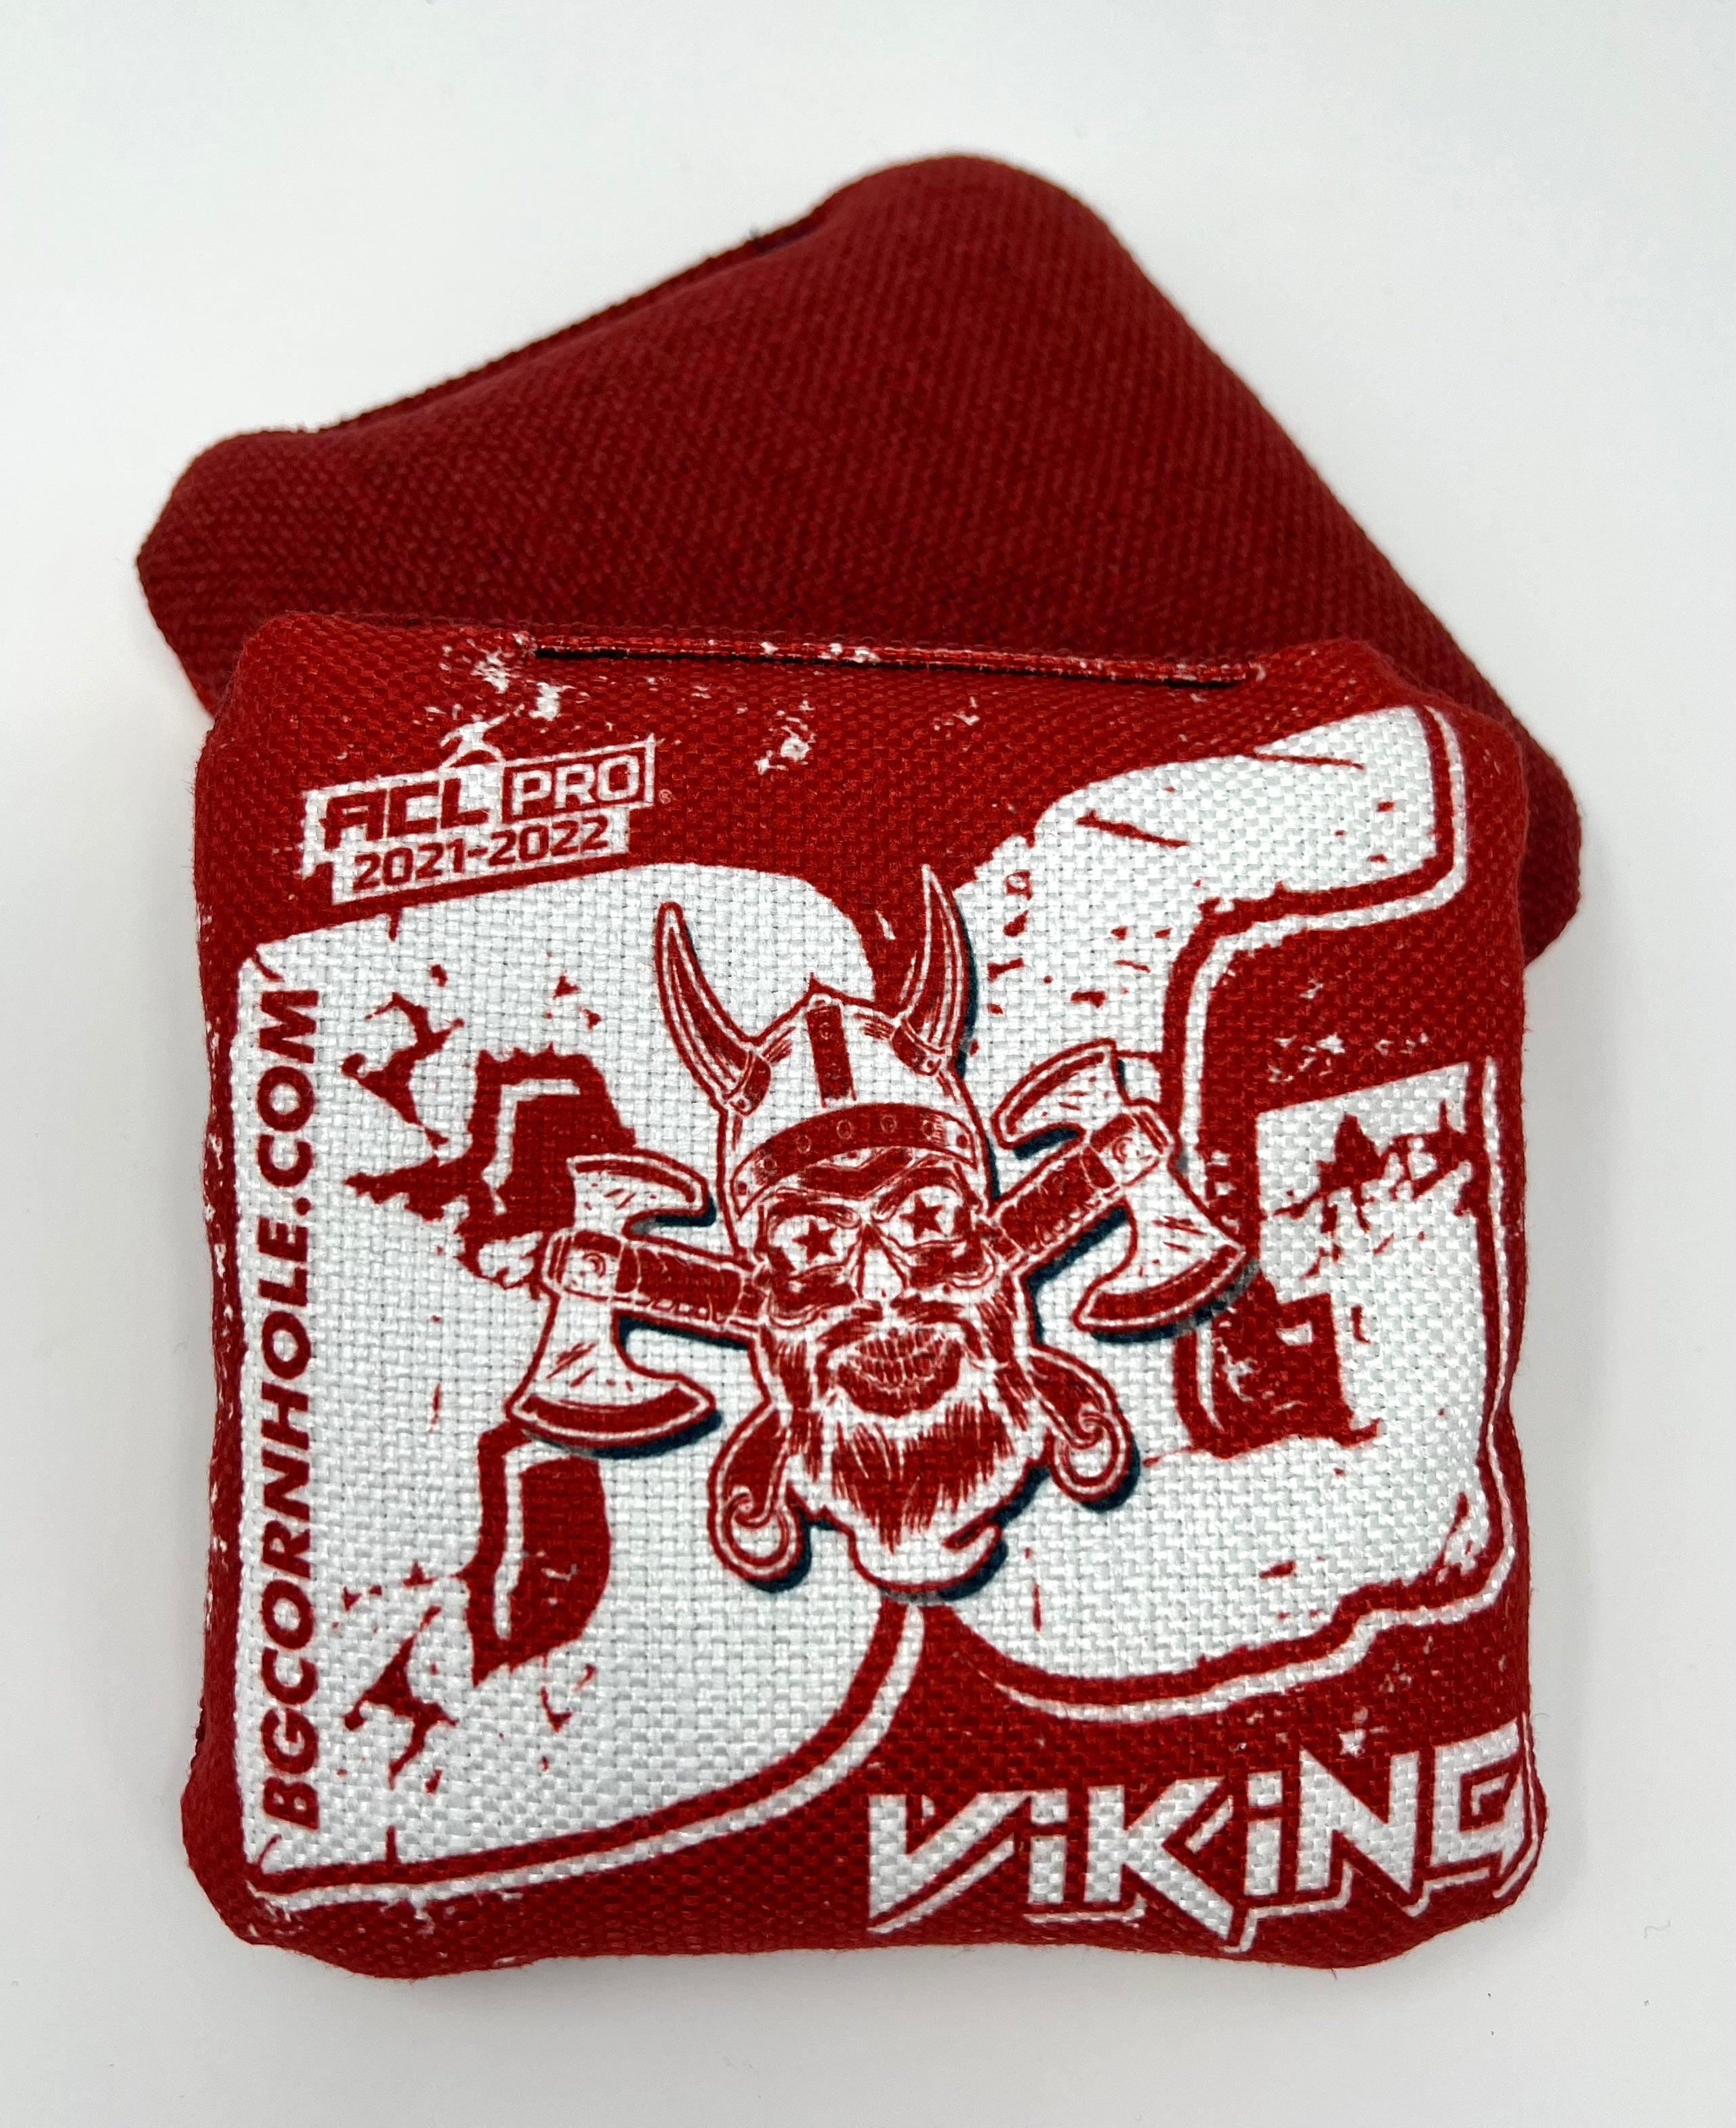 Cornhole Bags - BG Viking Collabs – Bags Boards